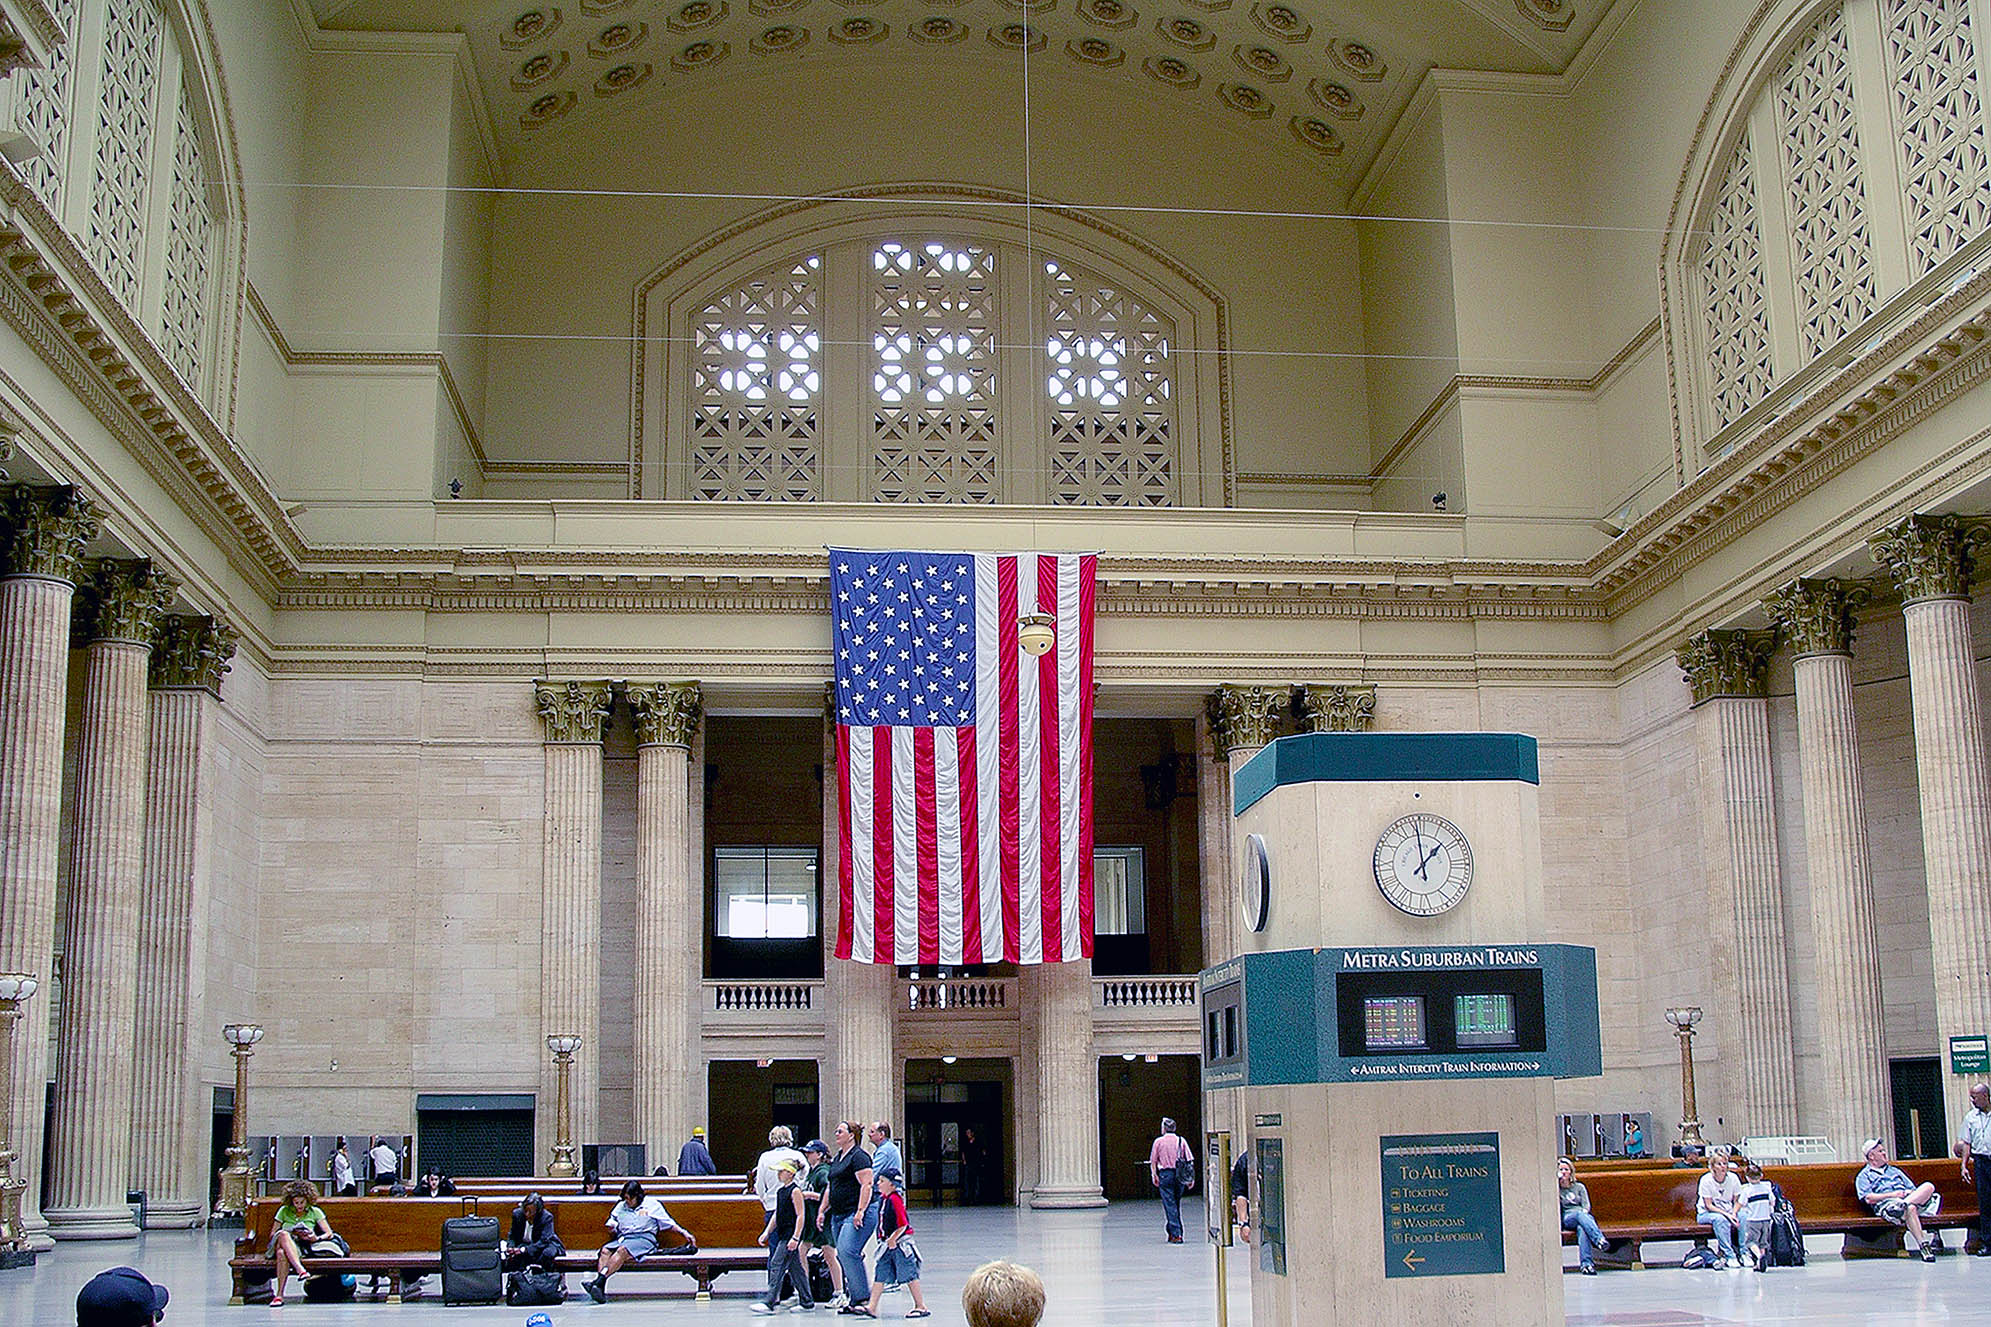 Union station Chicago Amtrak